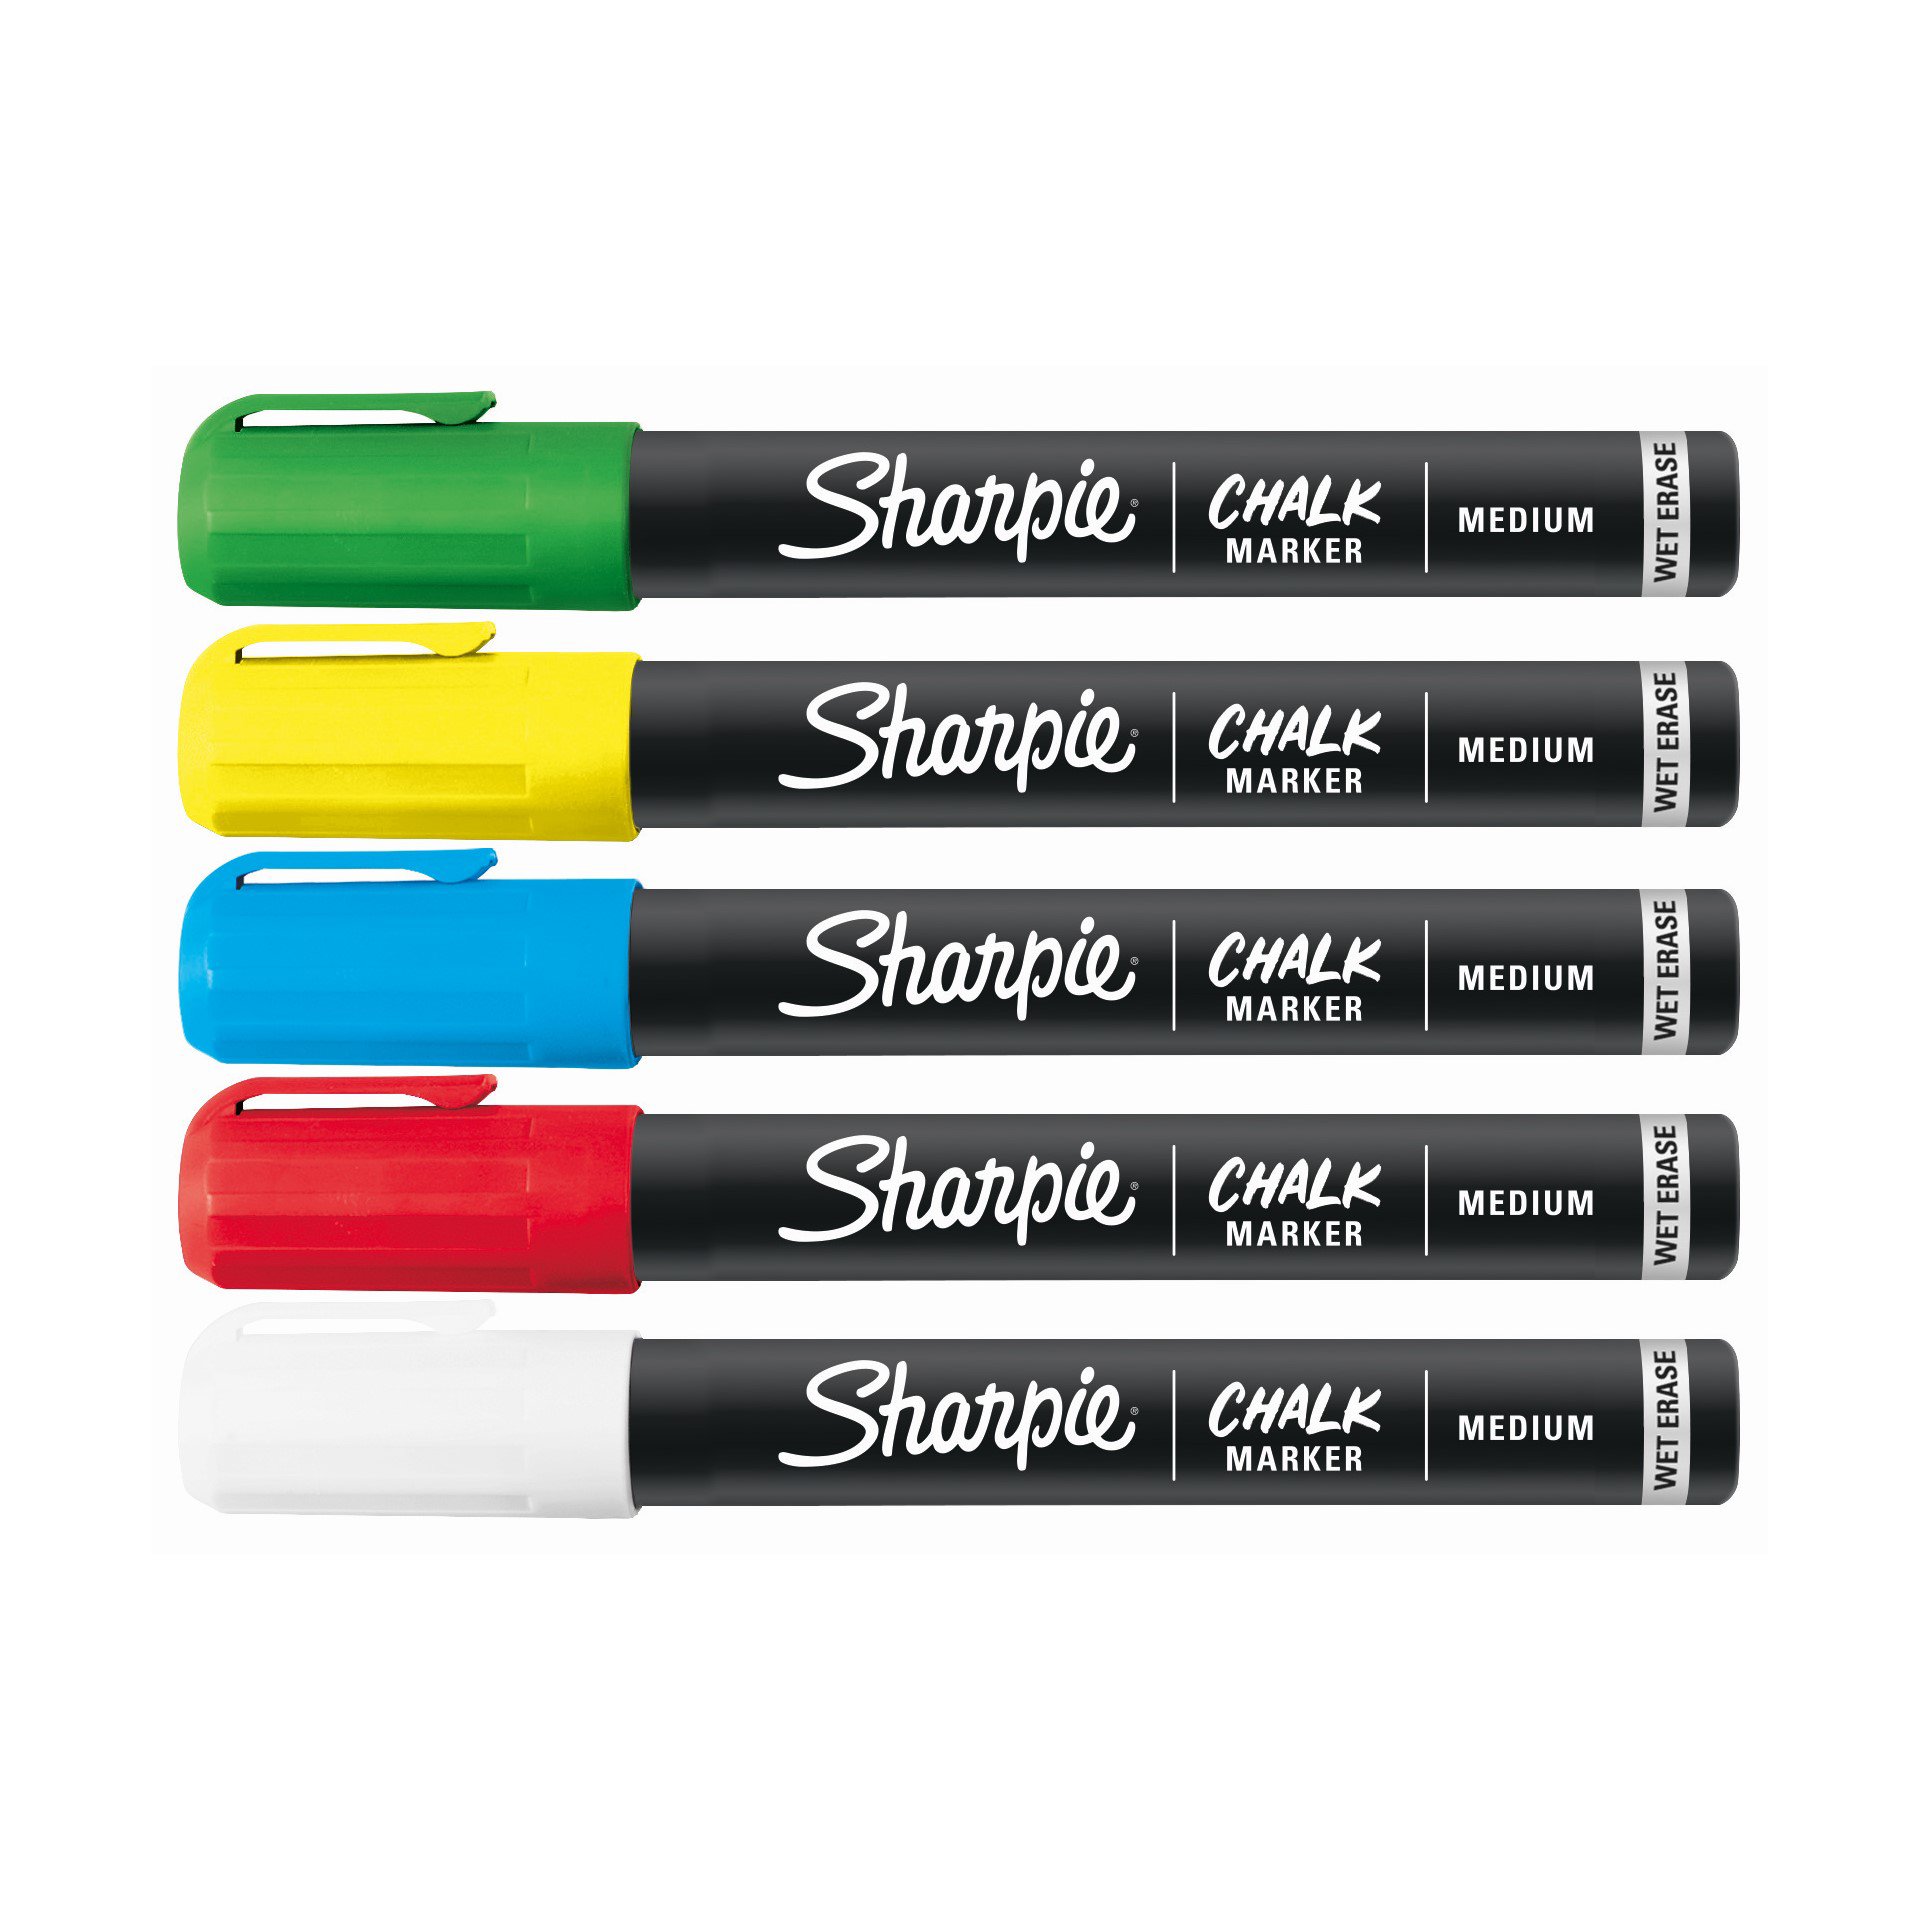 Creative Mark Wipe-Kleen Liquid Chalk Marker Neon Colors (Set Of 8)